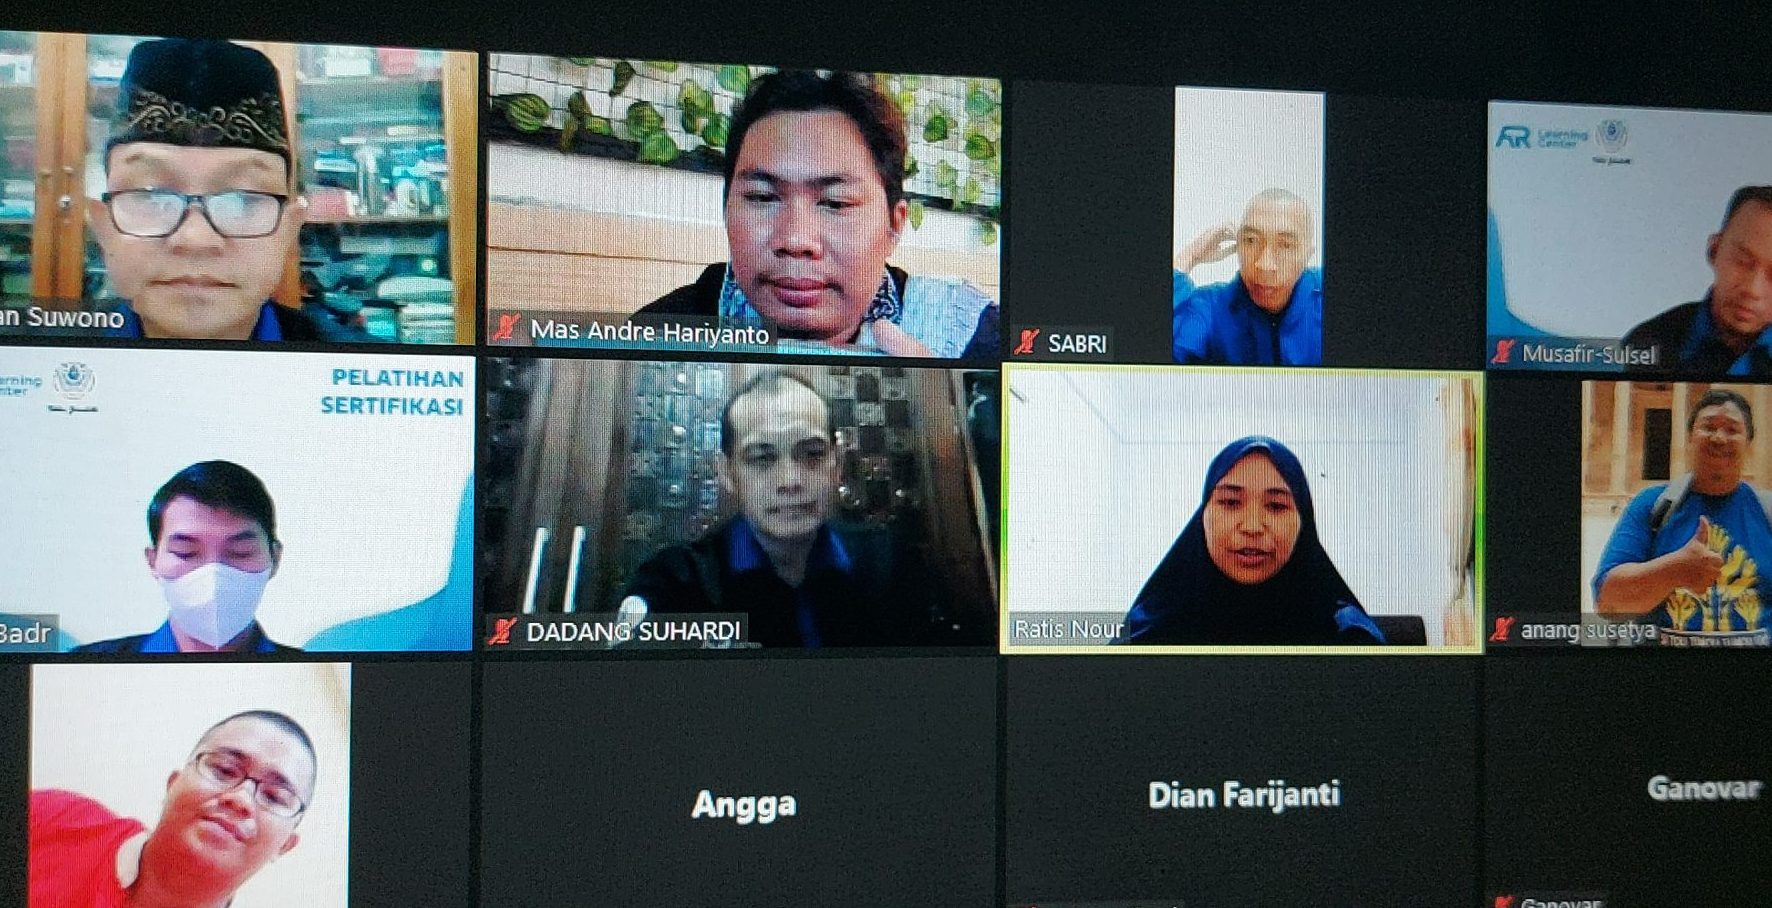 Foto: Dok. Kegiatan Webinar. Jalin Silaturahmi, Yayasan AR Learning Center Sukses Gelar Webinar Nasional bersama Trainer Internasional/Mas Andre Hariyanto.